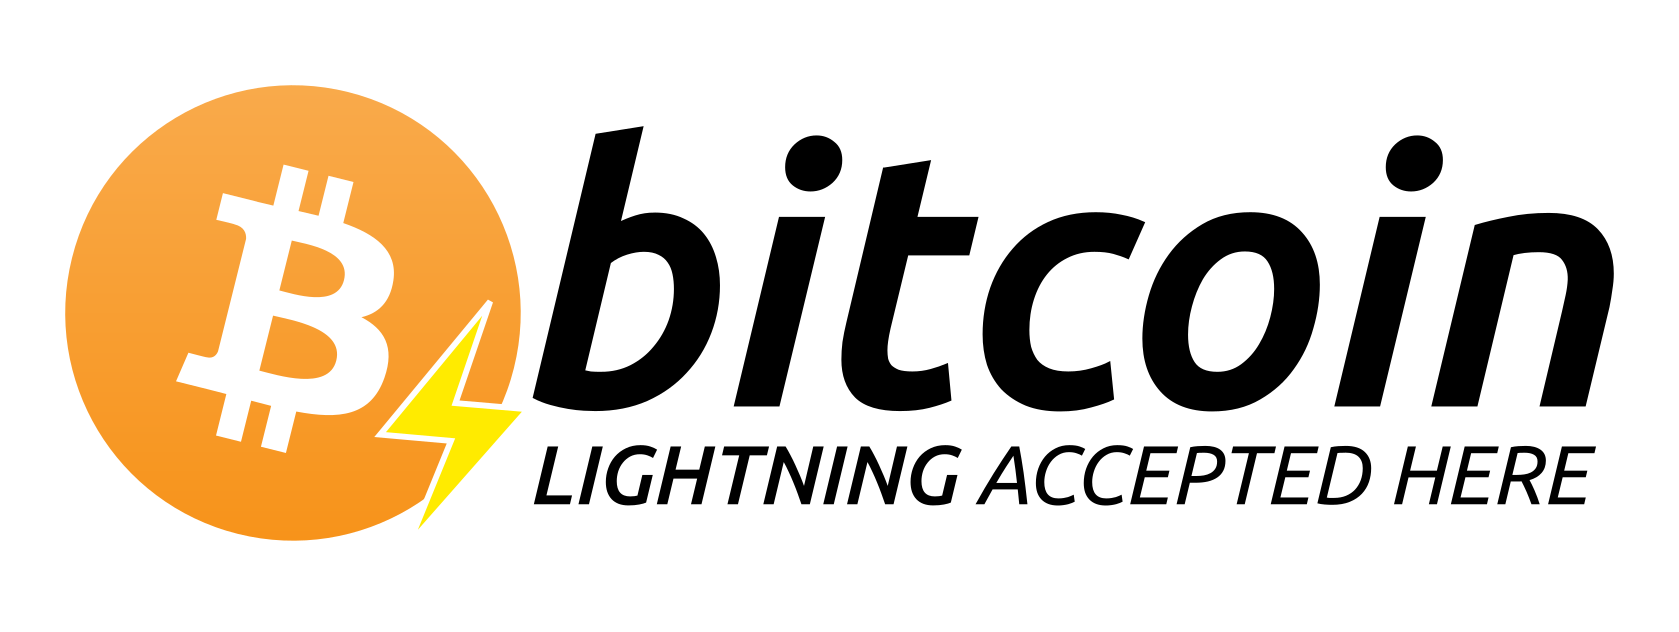 BTC_Lightning_Accepted